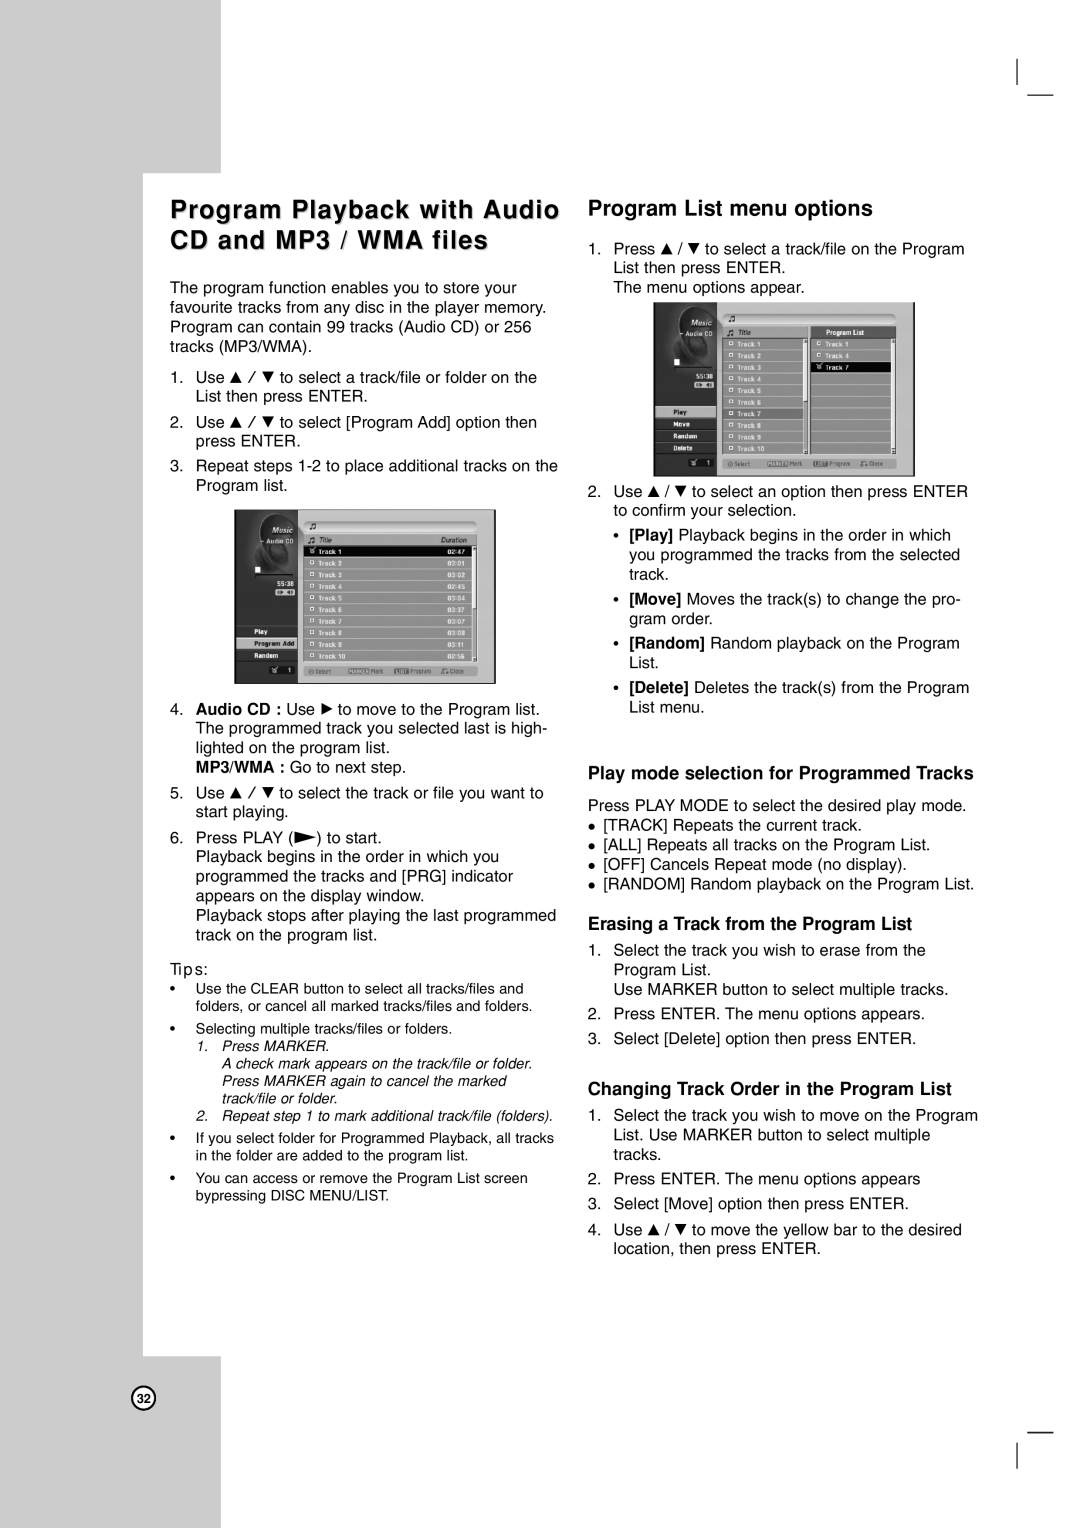 Zenith ZRY-316 warranty Program Playback with Audio CD and MP3 / WMA files, Program List menu options, Tips 